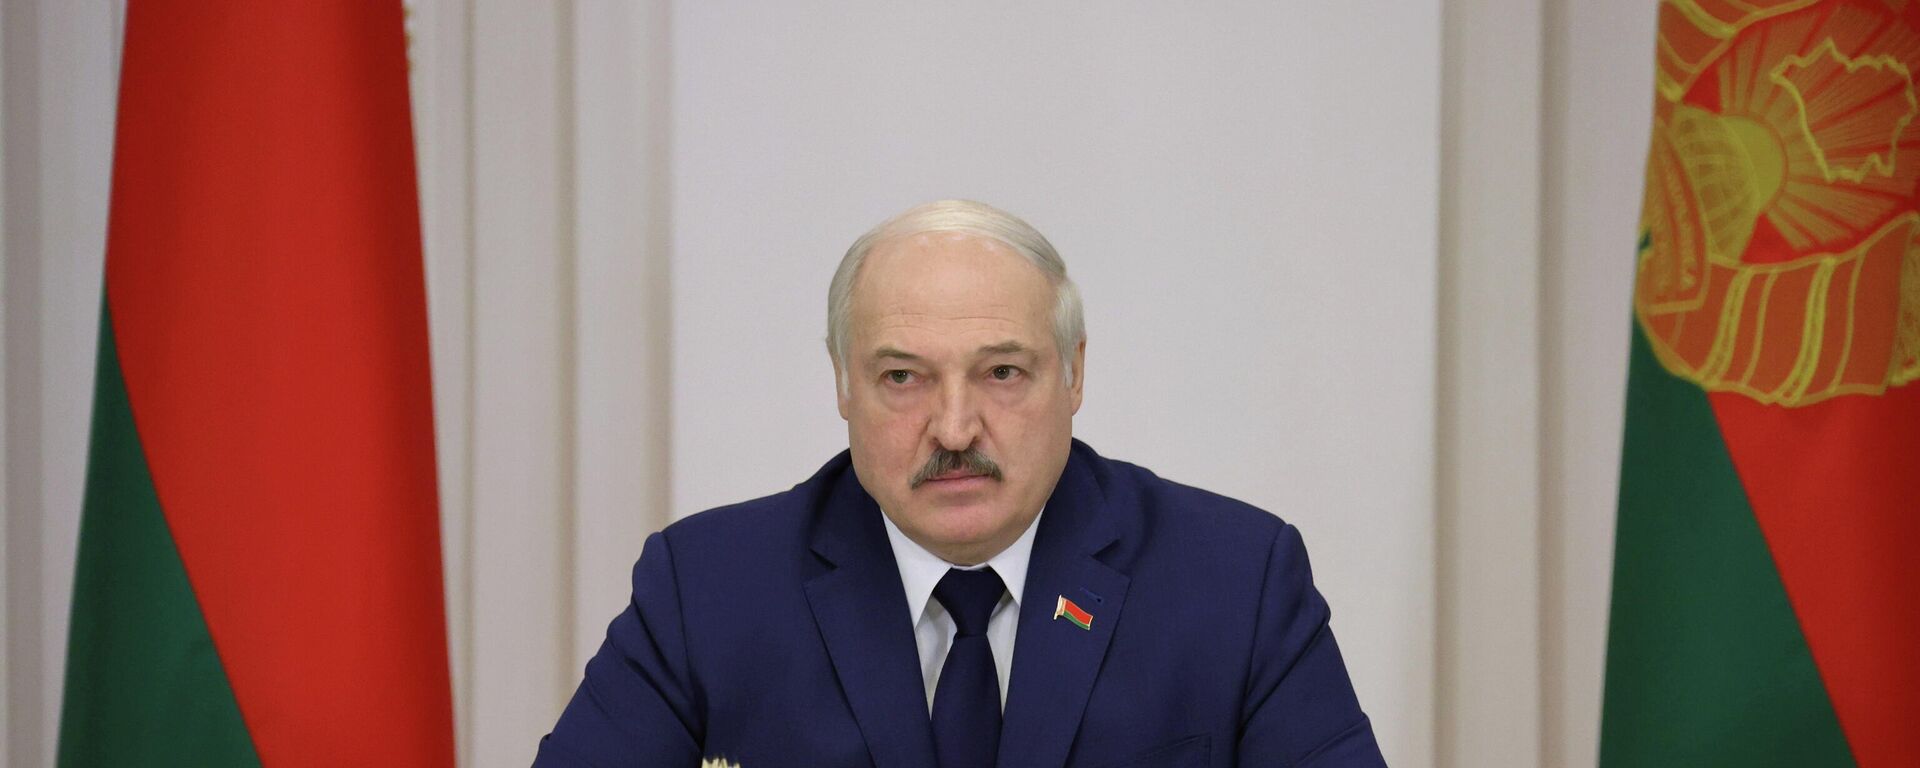 Alexandr Lukashenko, presidente bielorruso - Sputnik Mundo, 1920, 13.11.2021